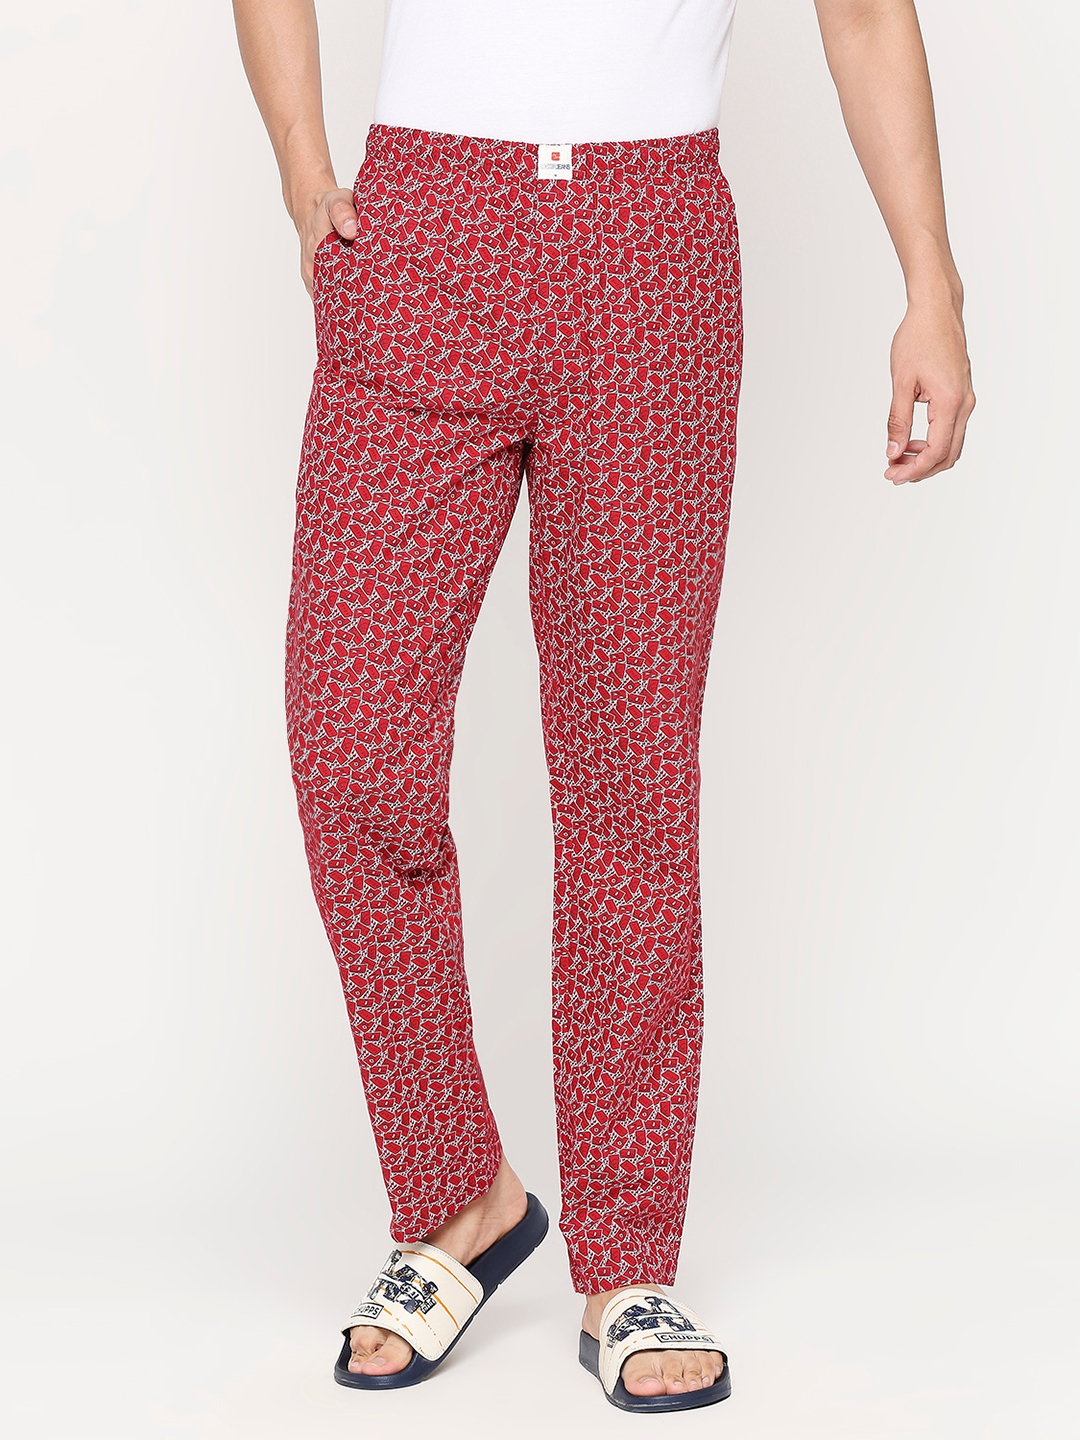 Underjeans by Spykar Men Red & White Cotton Regular Fit Pyjama